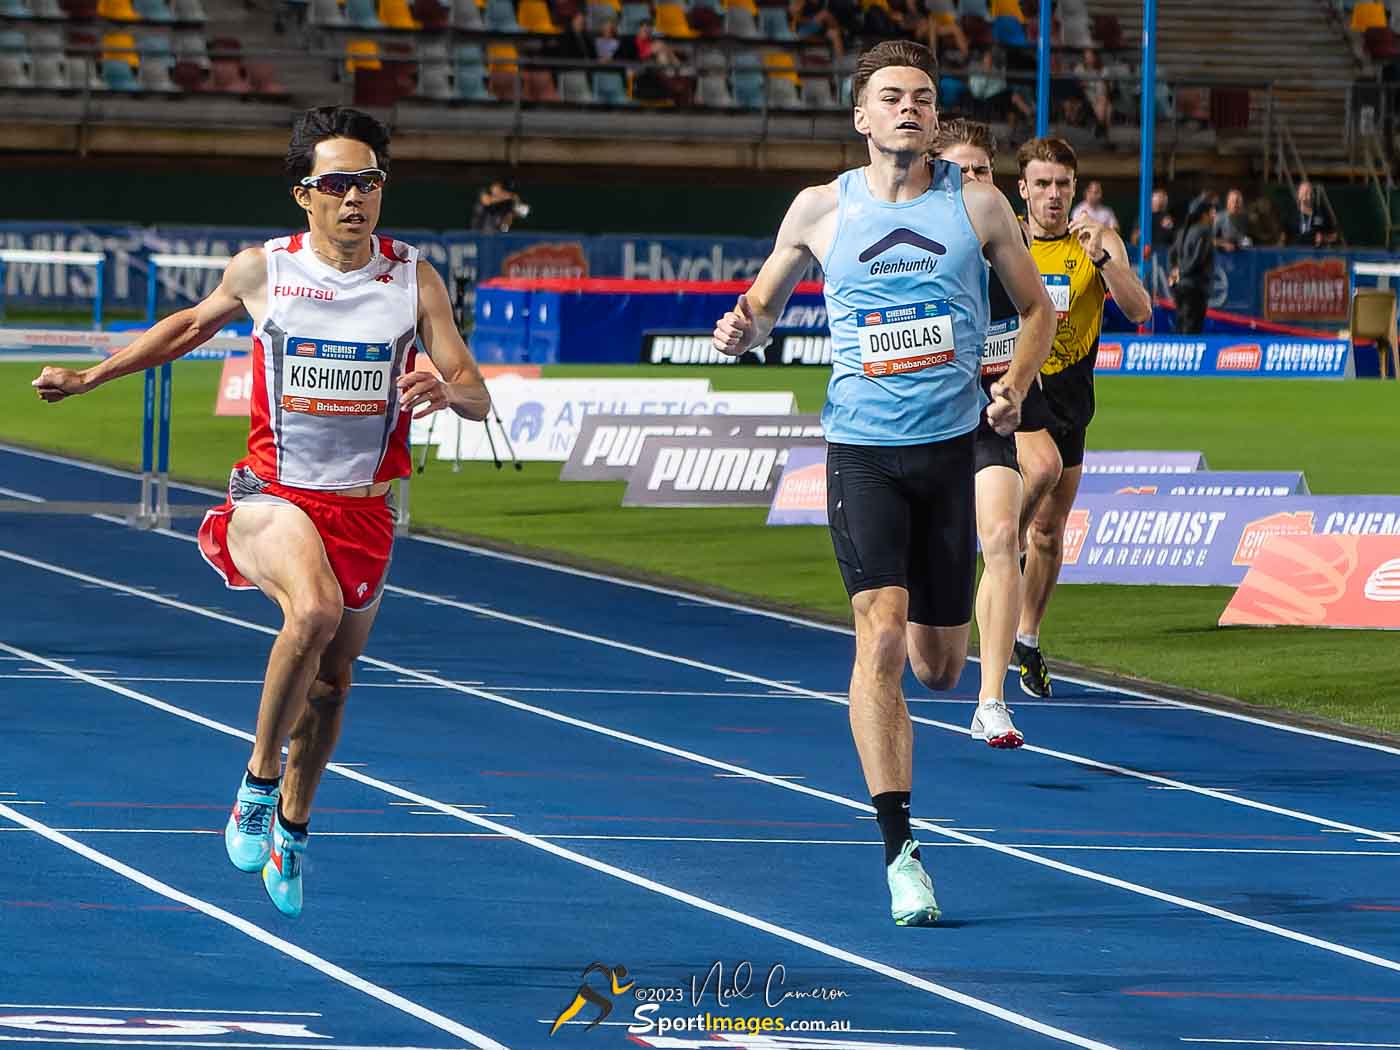 Takayuki Kishimoto, Chris Douglas, Men's 400m Hurdles